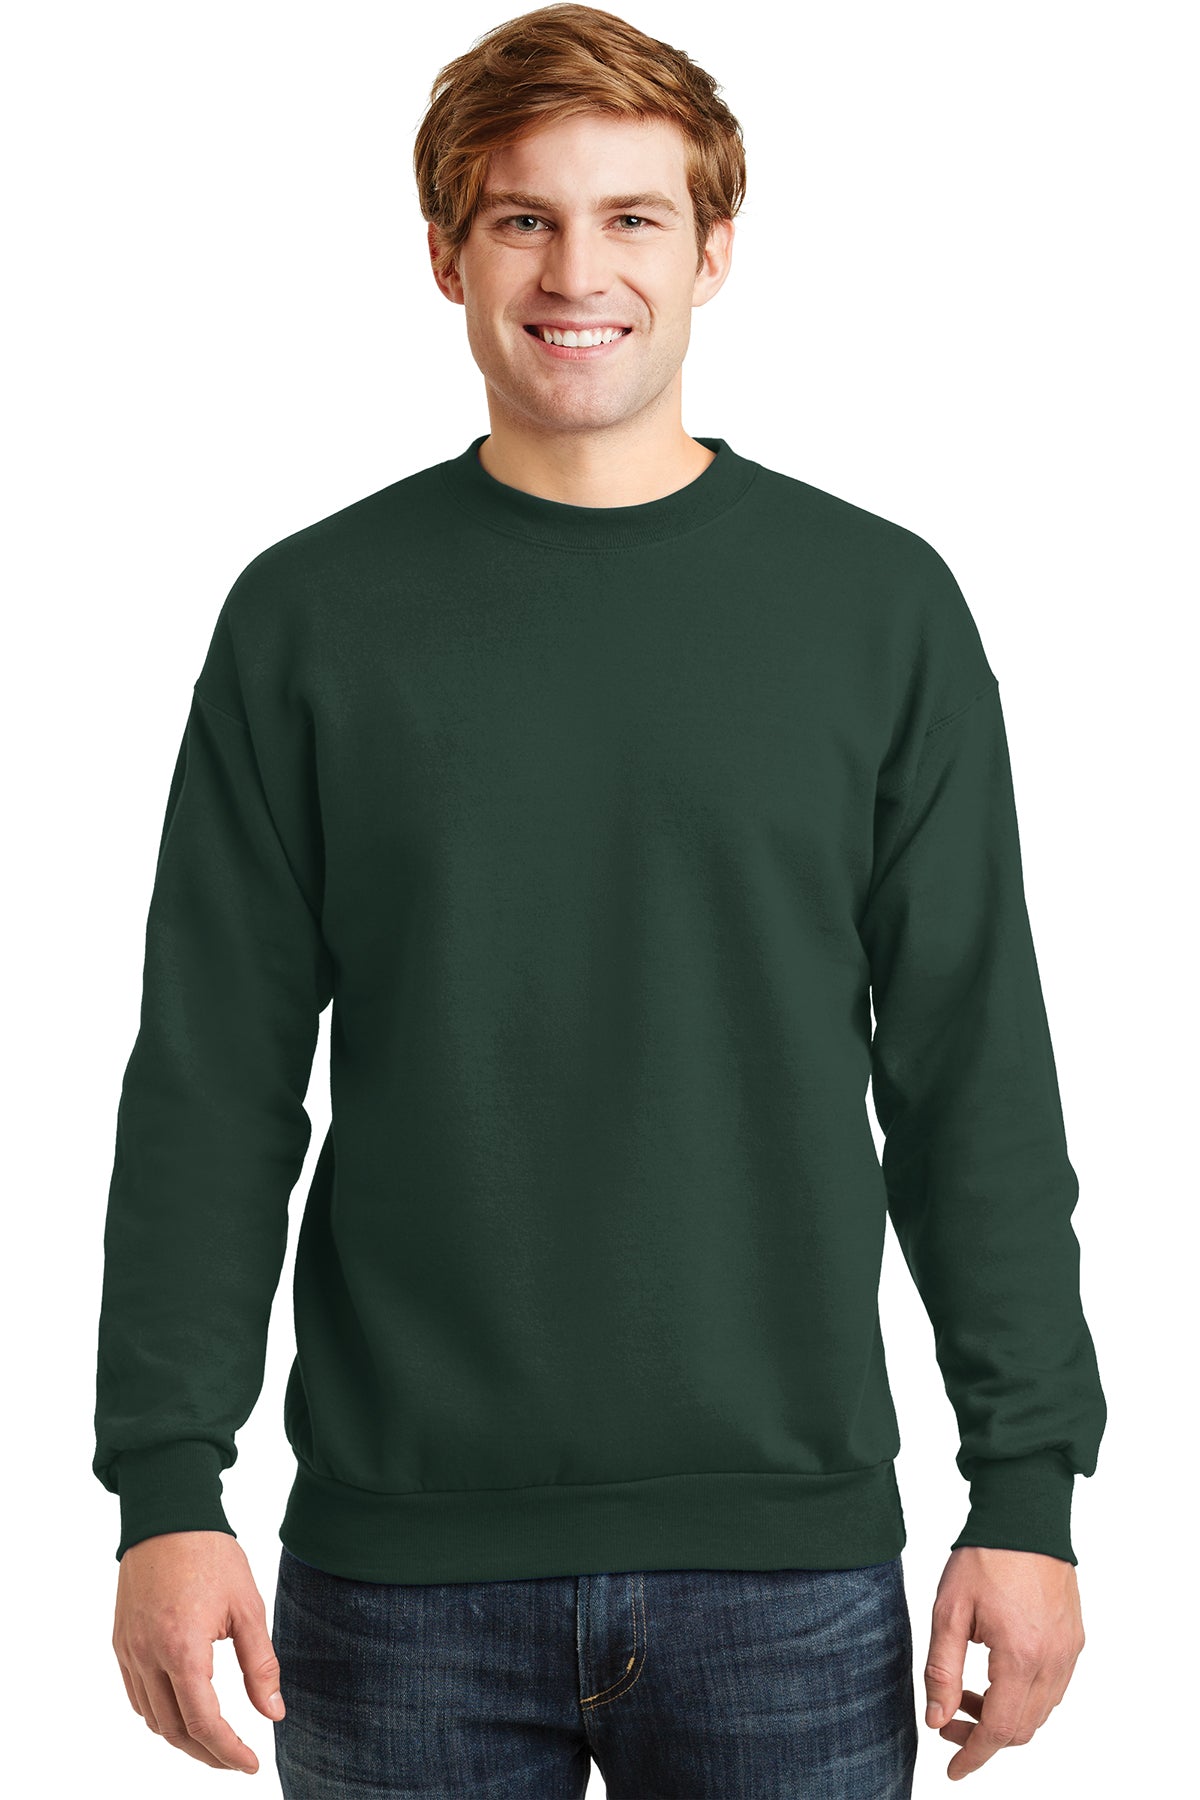 Hanes® - EcoSmart® Crewneck Sweatshirt. P1607 – Fann Emblem USA